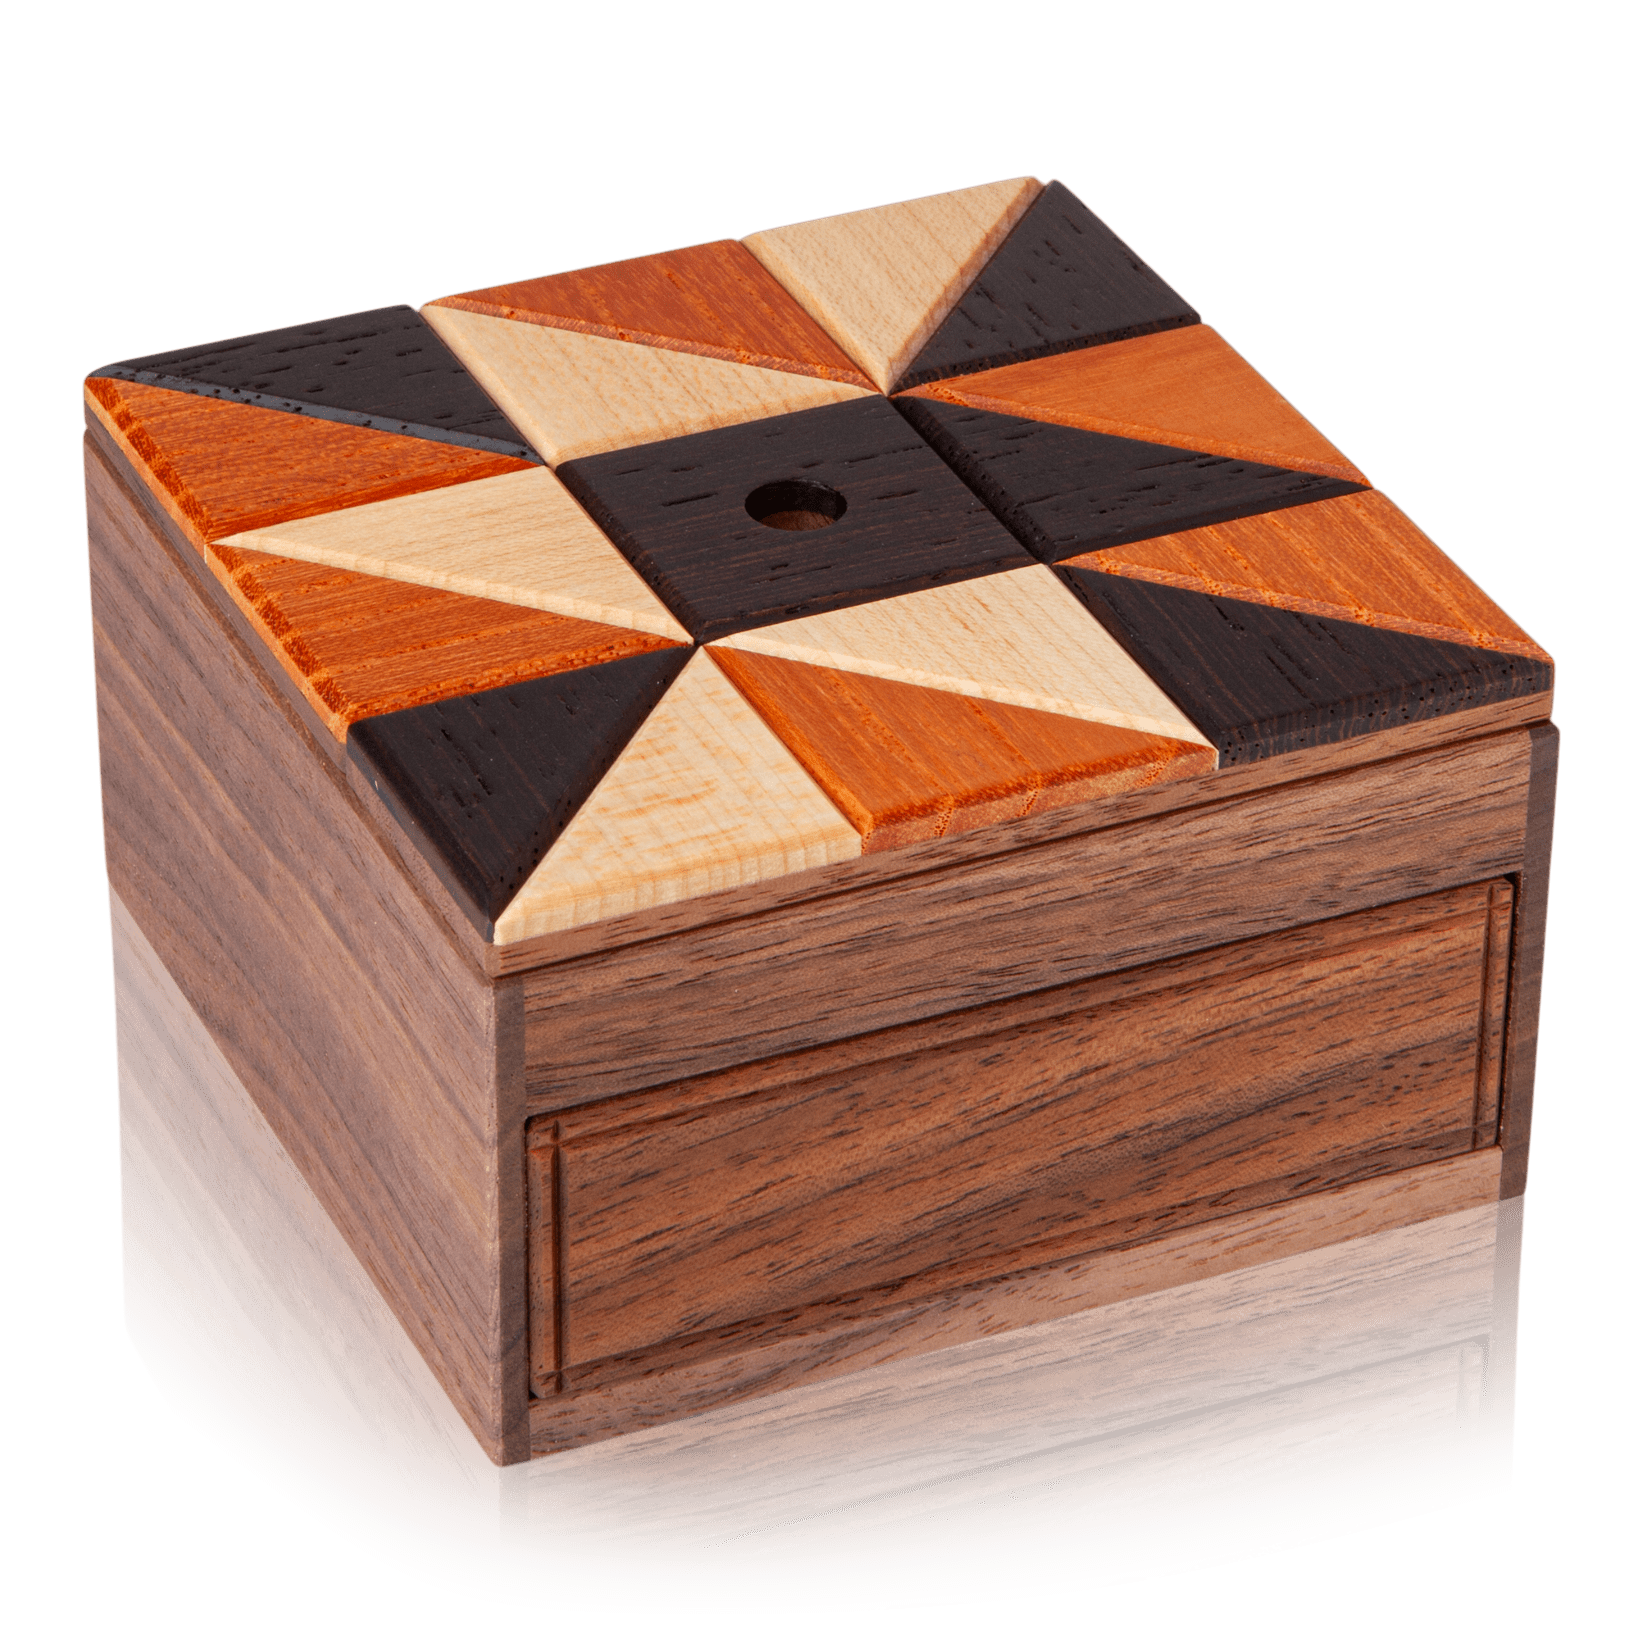 Wooden Mechanical Model Mystery Box